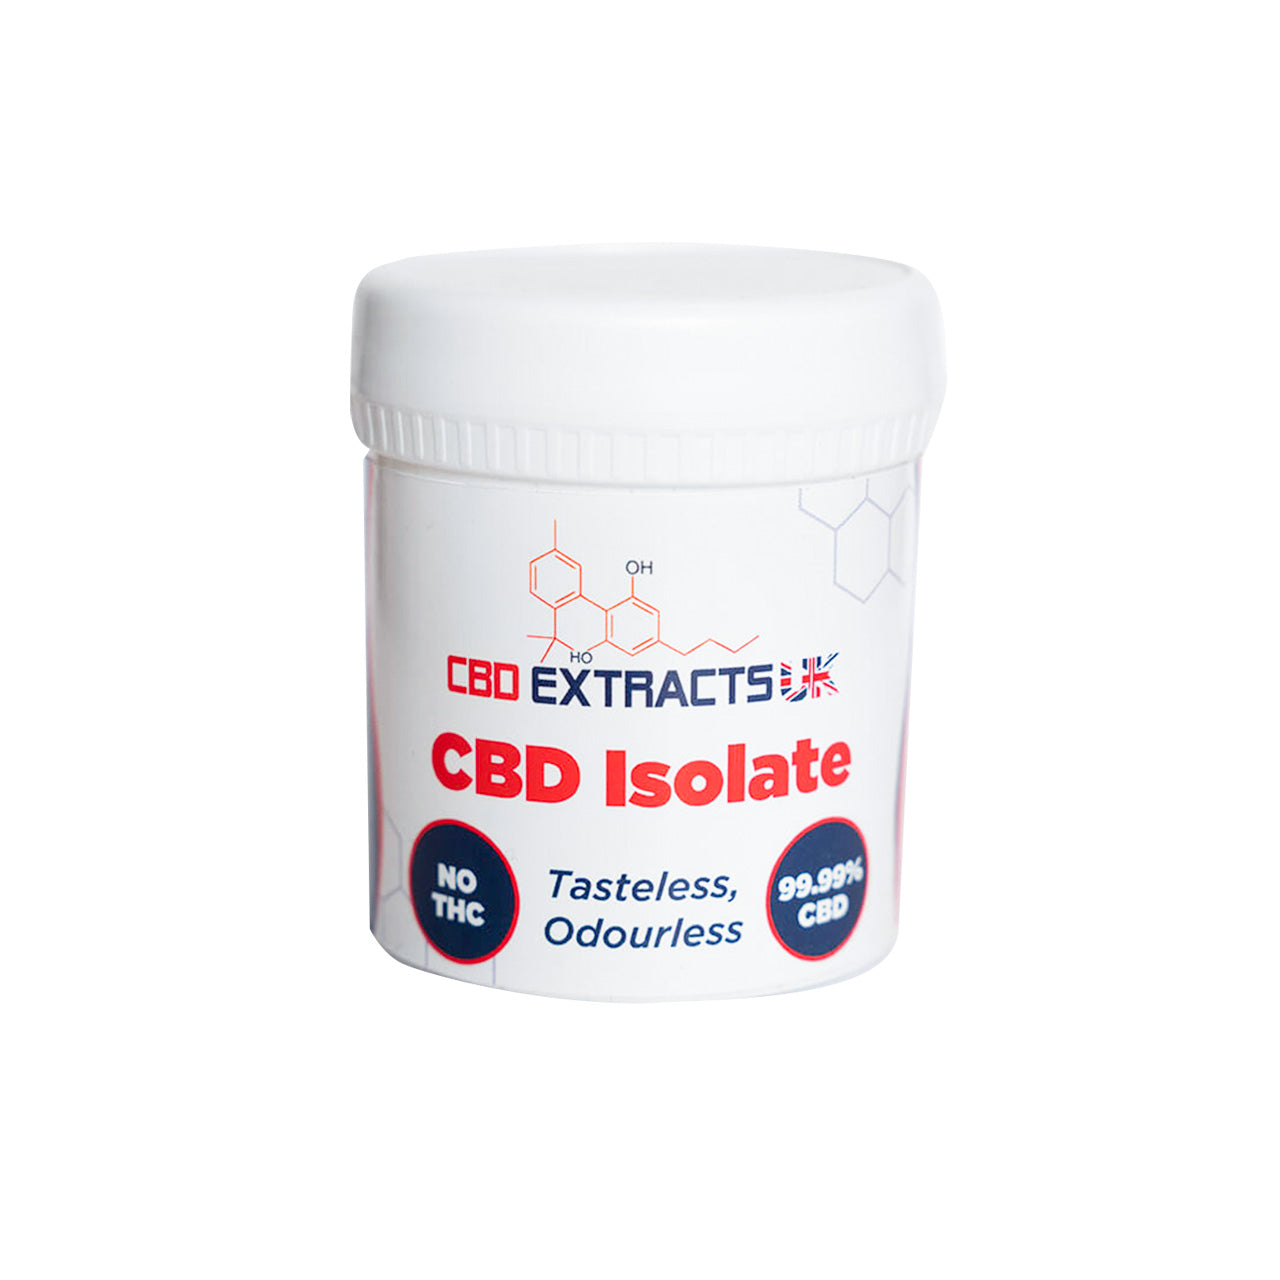 99% CBD Isolate - 0% THC